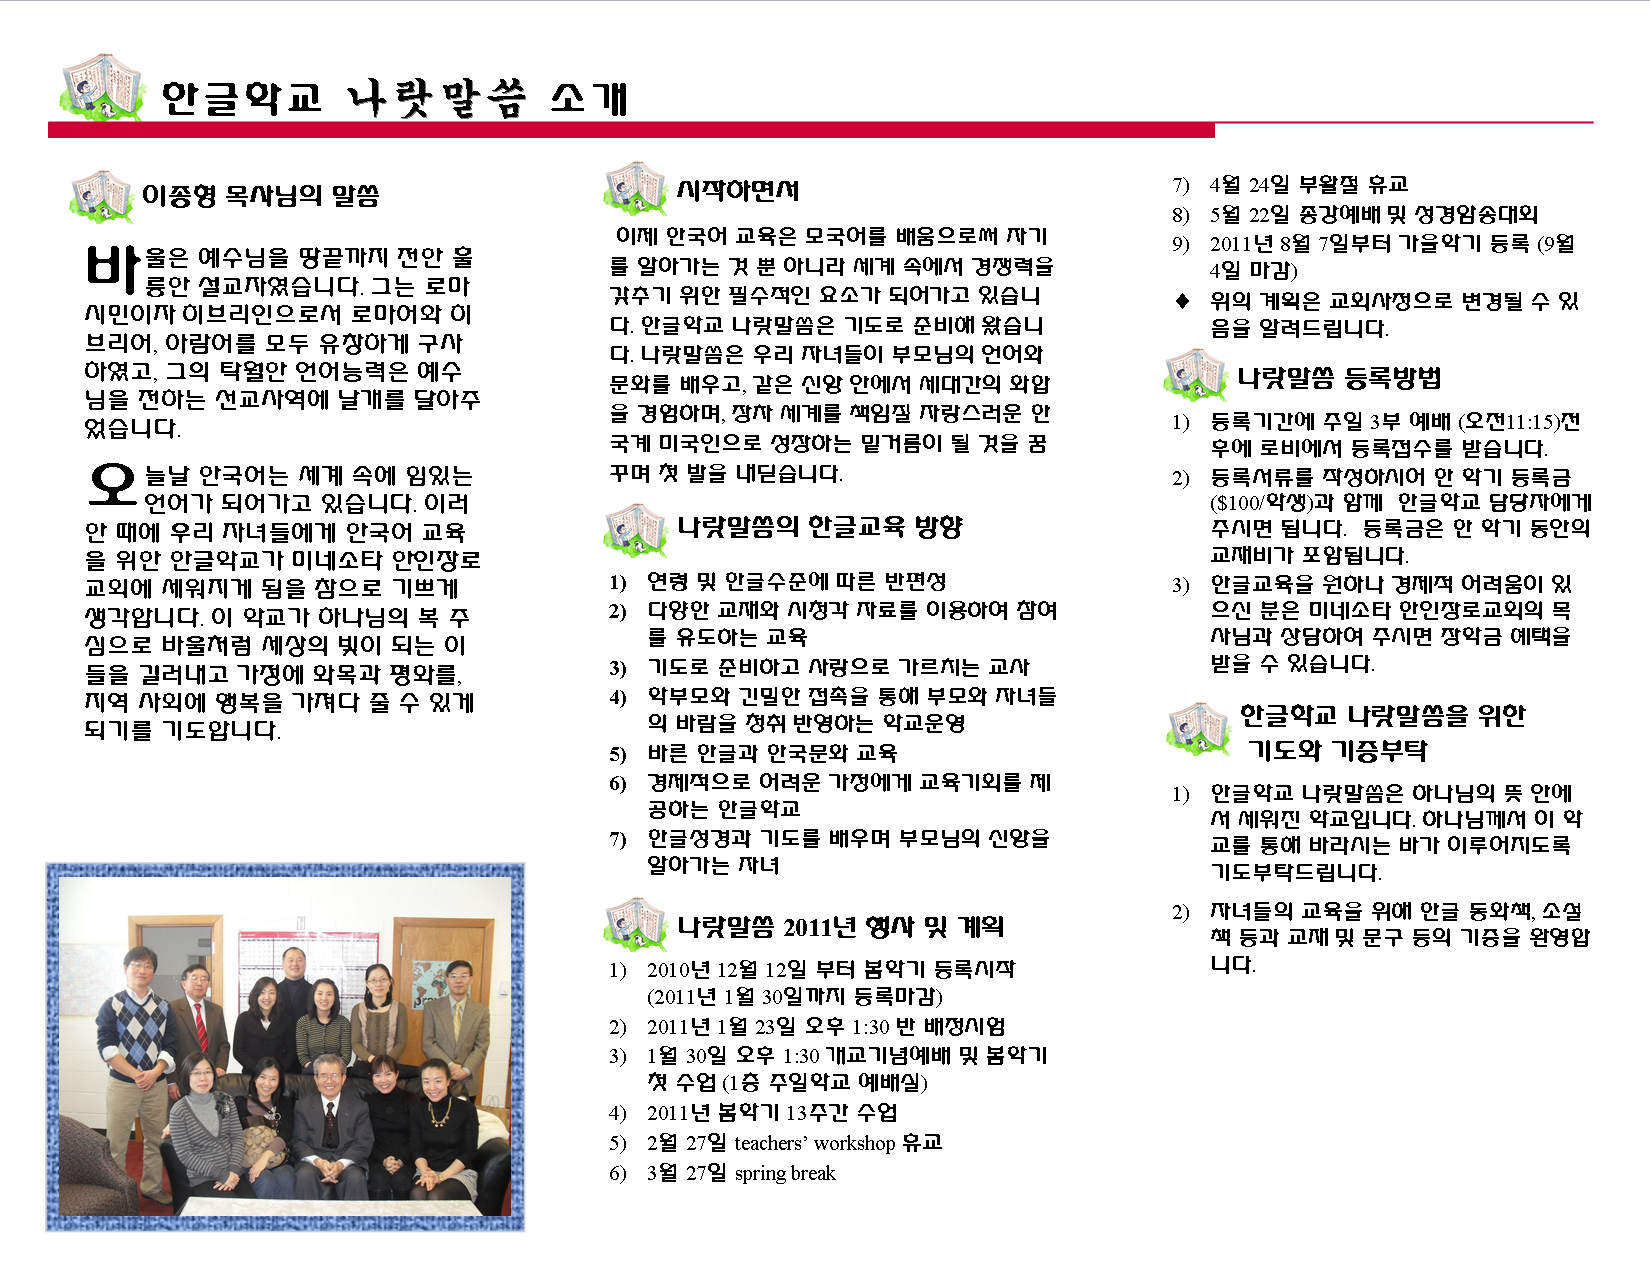 kpcm_koreanschool2.png